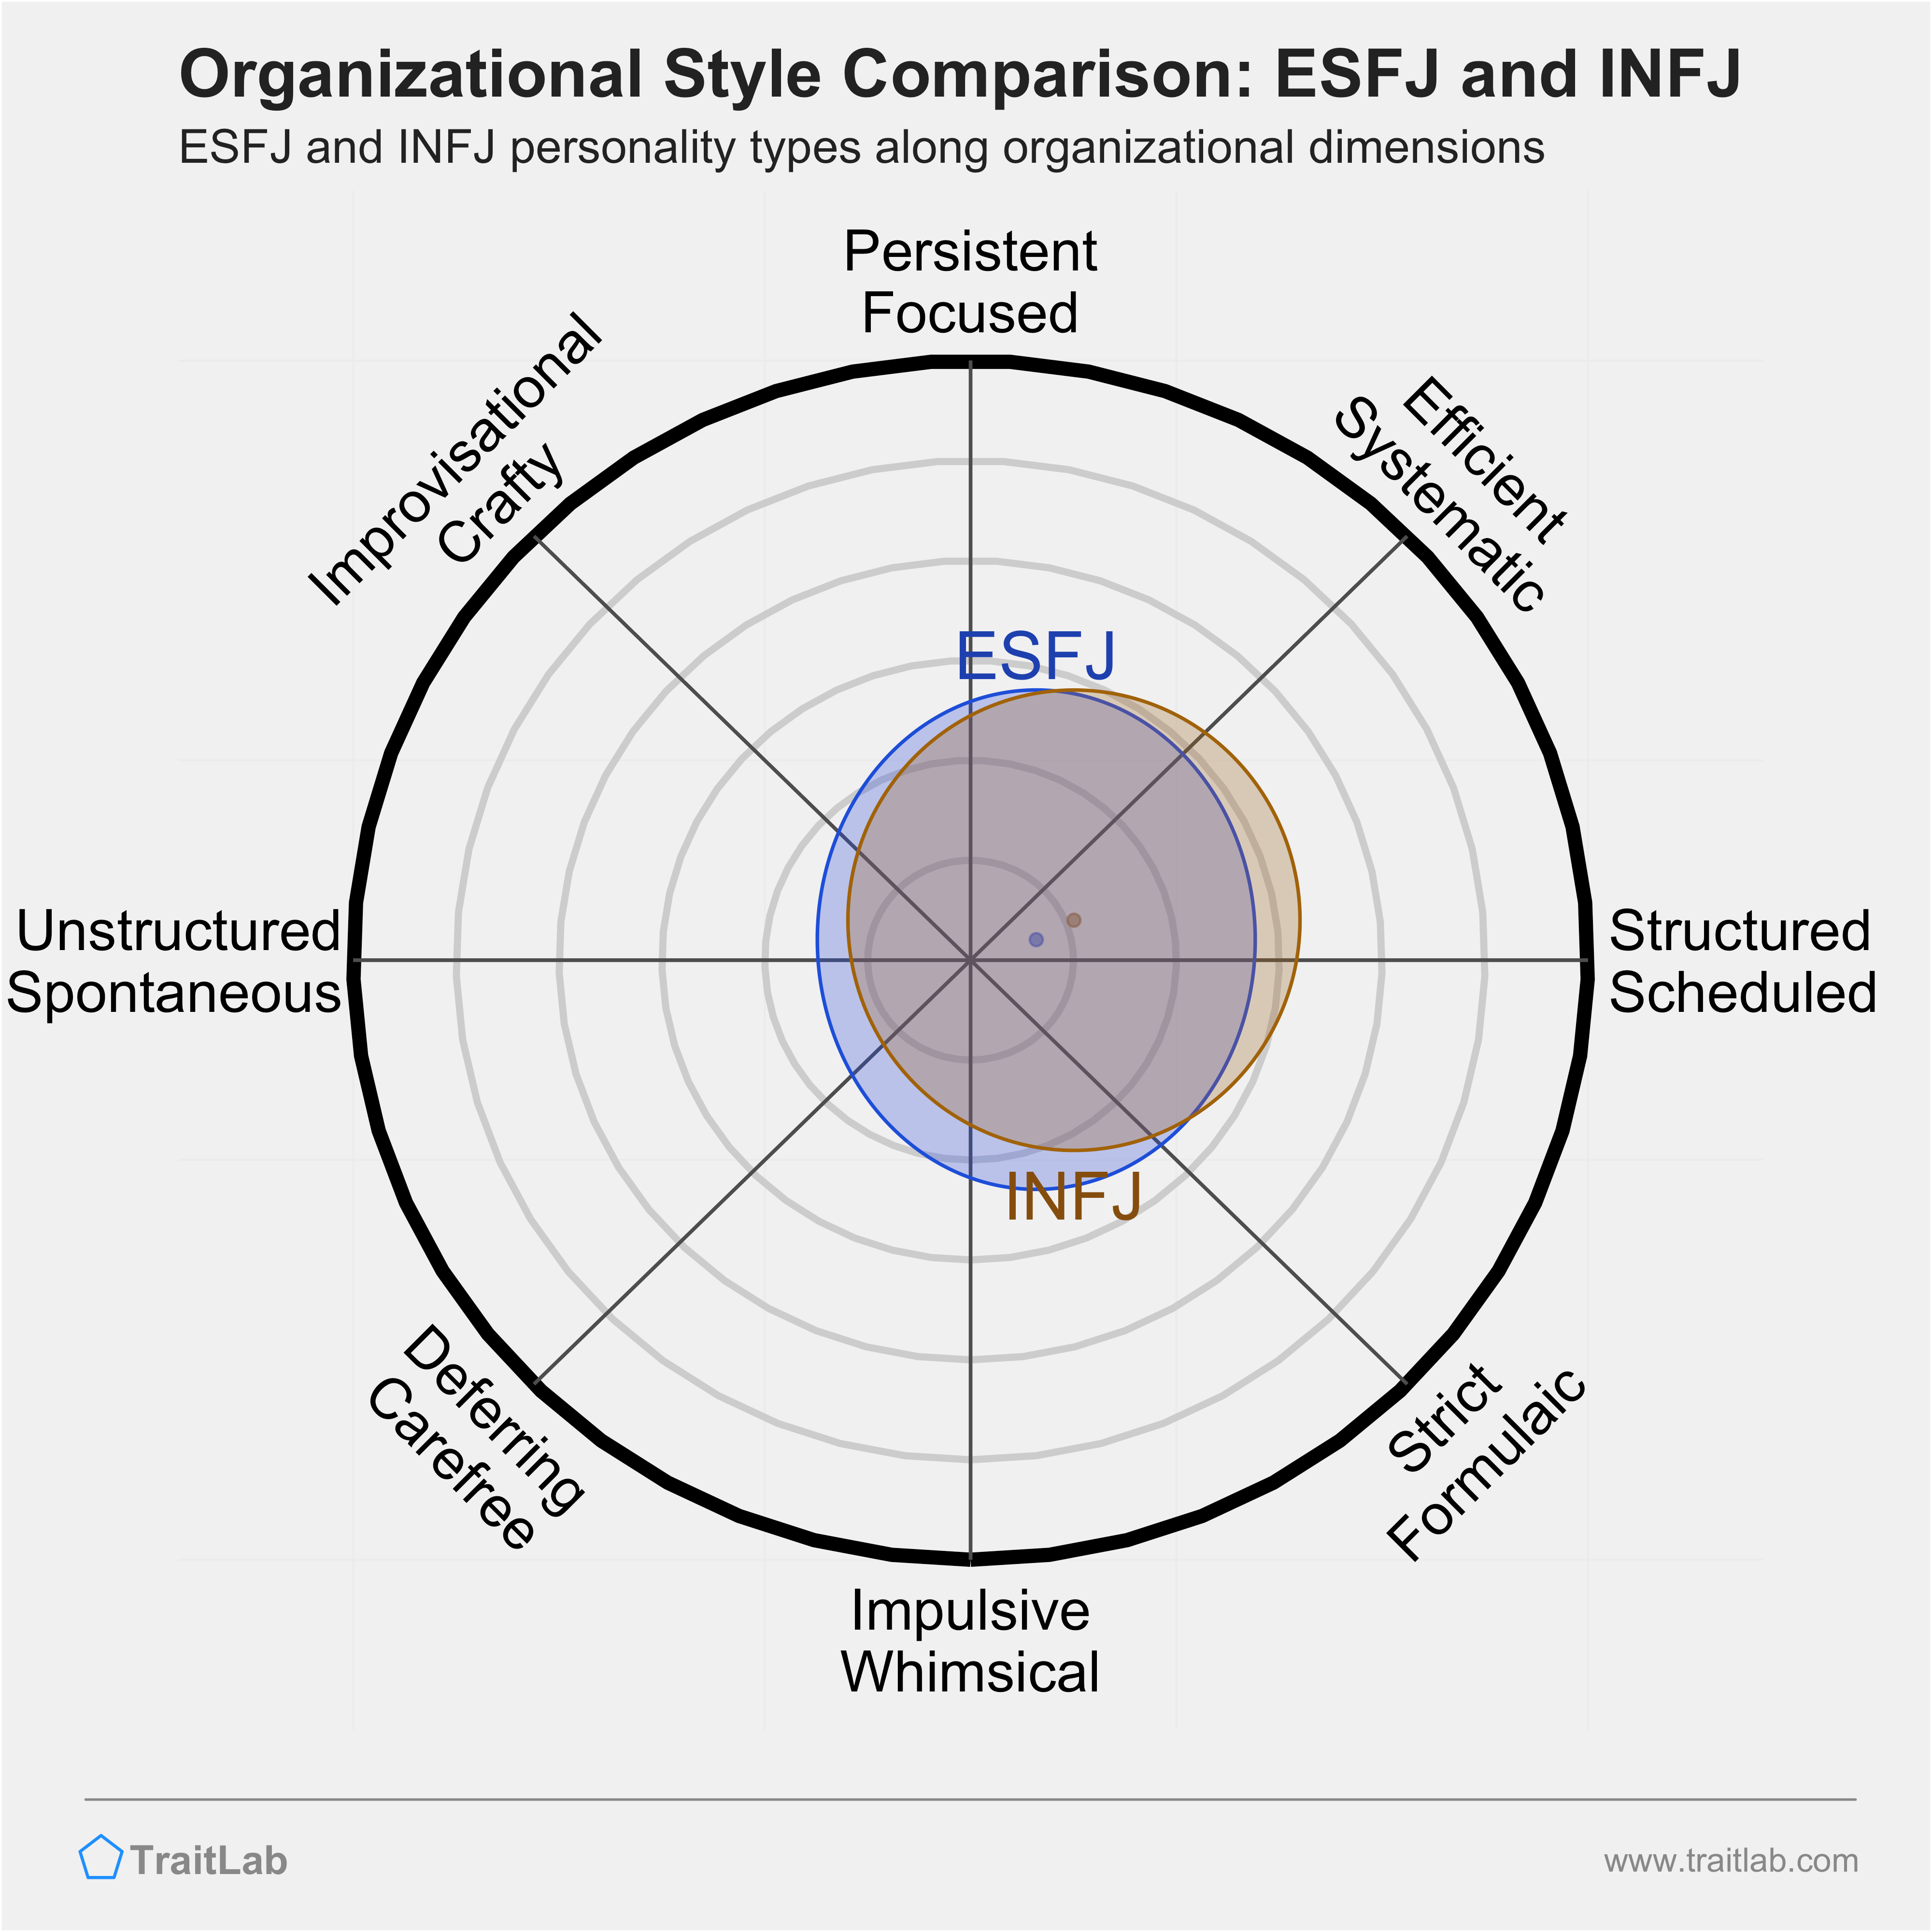 ESFJ and INFJ comparison across organizational dimensions